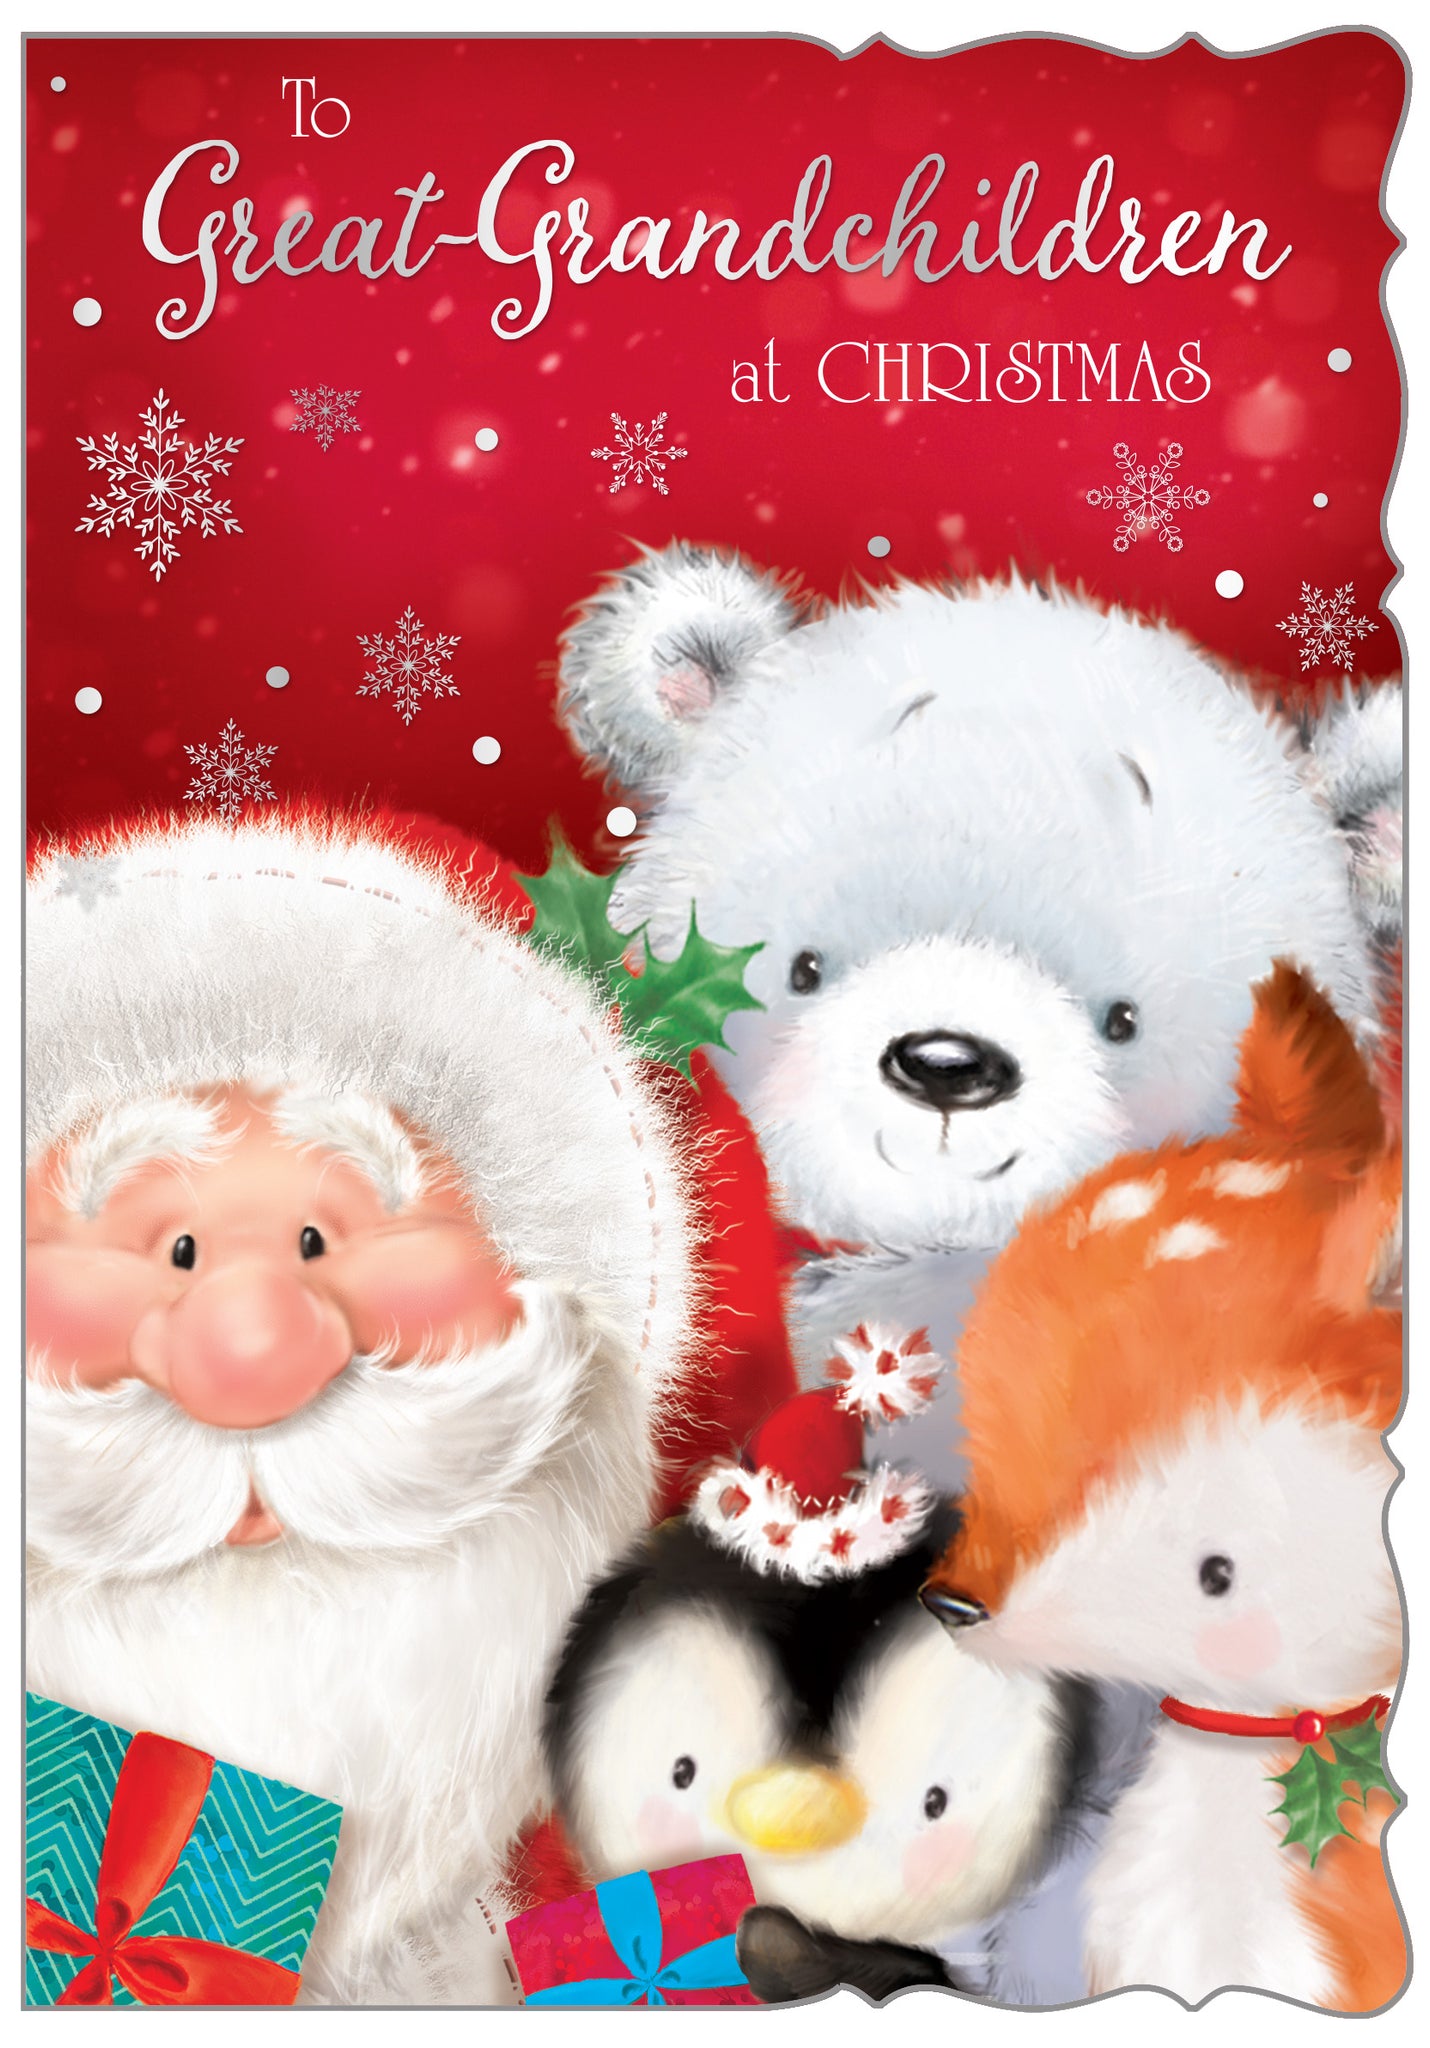 Great-Grandchildren Christmas card - cute